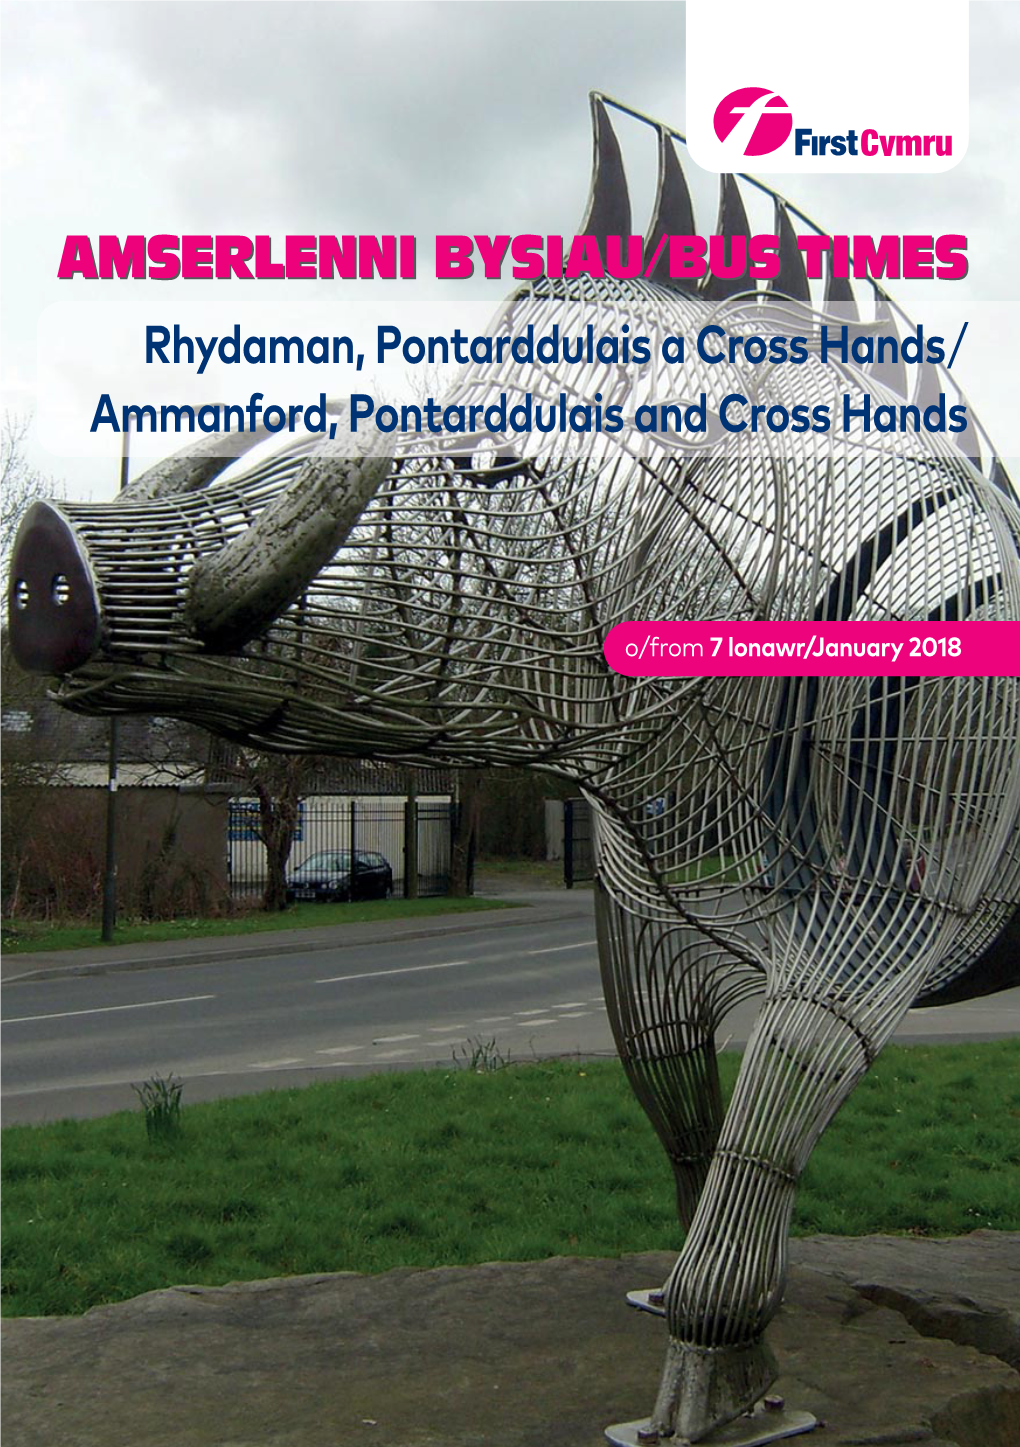 AMSERLENNI BYSIAU/BUS TIMES Rhydaman, Pontarddulais a Cross Hands/ Ammanford, Pontarddulais and Cross Hands